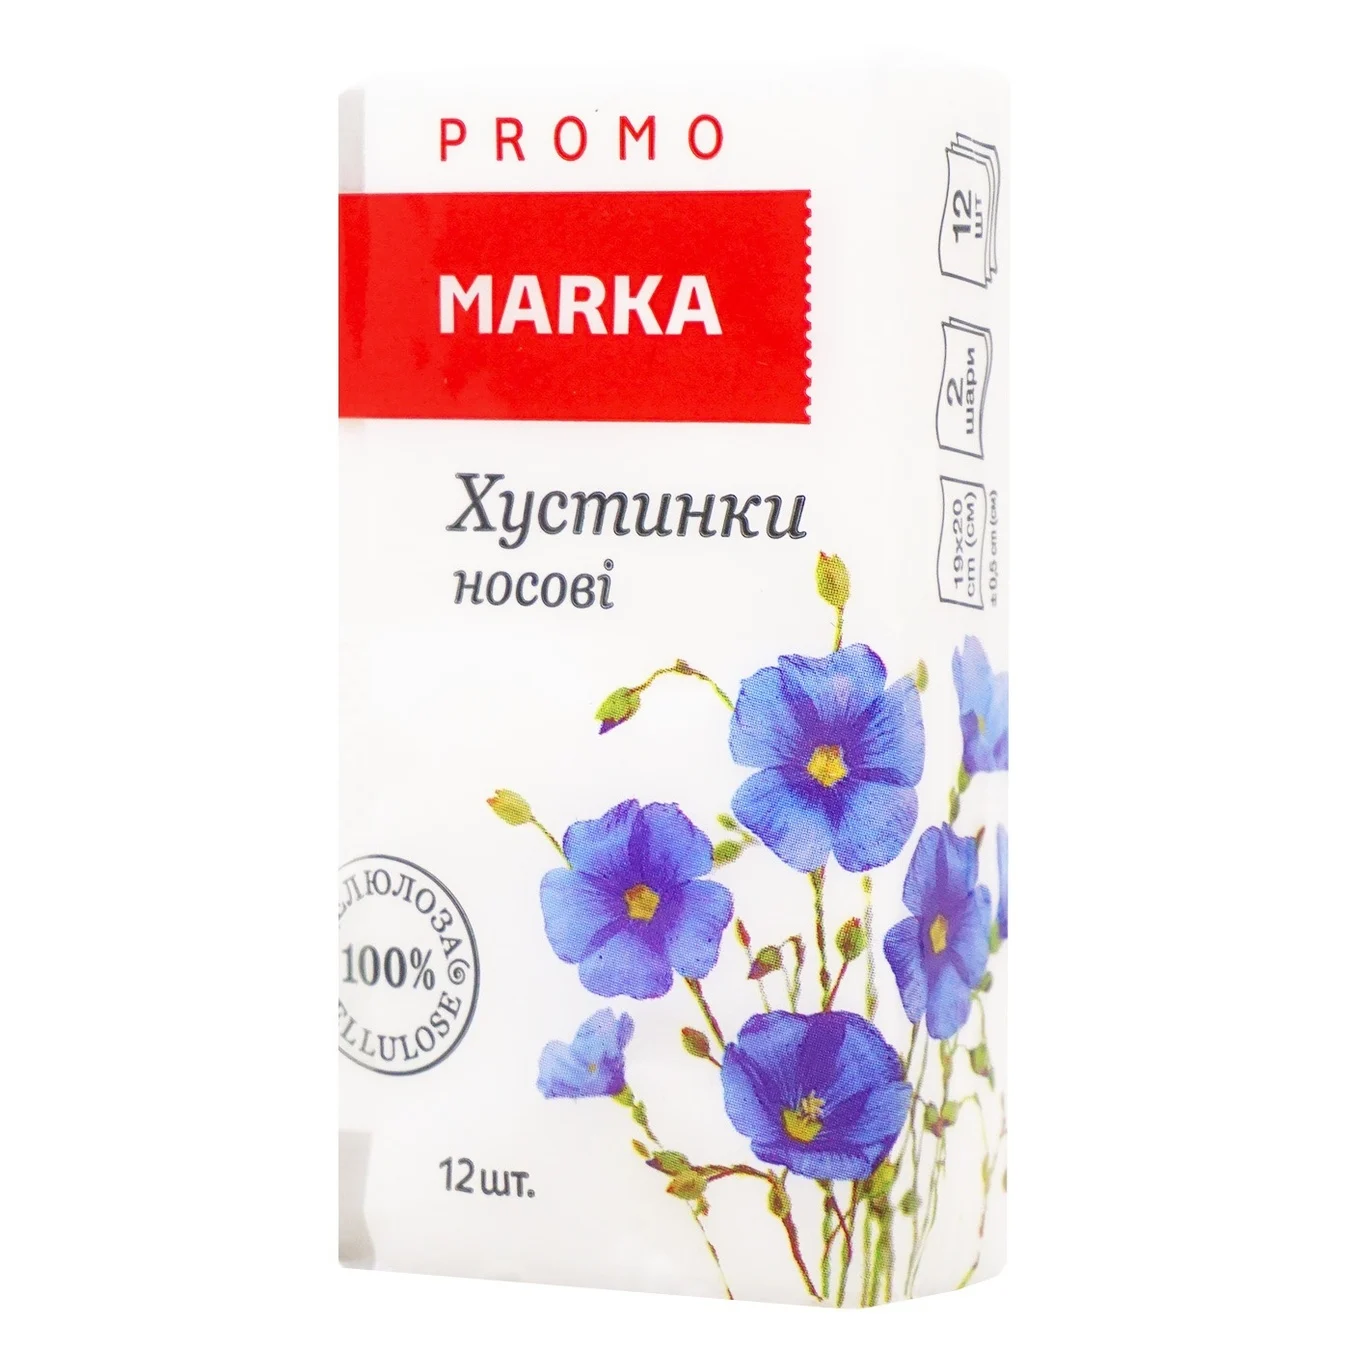 Marka Promo White Three-Layer Paper Handkerchiefs 12pcs